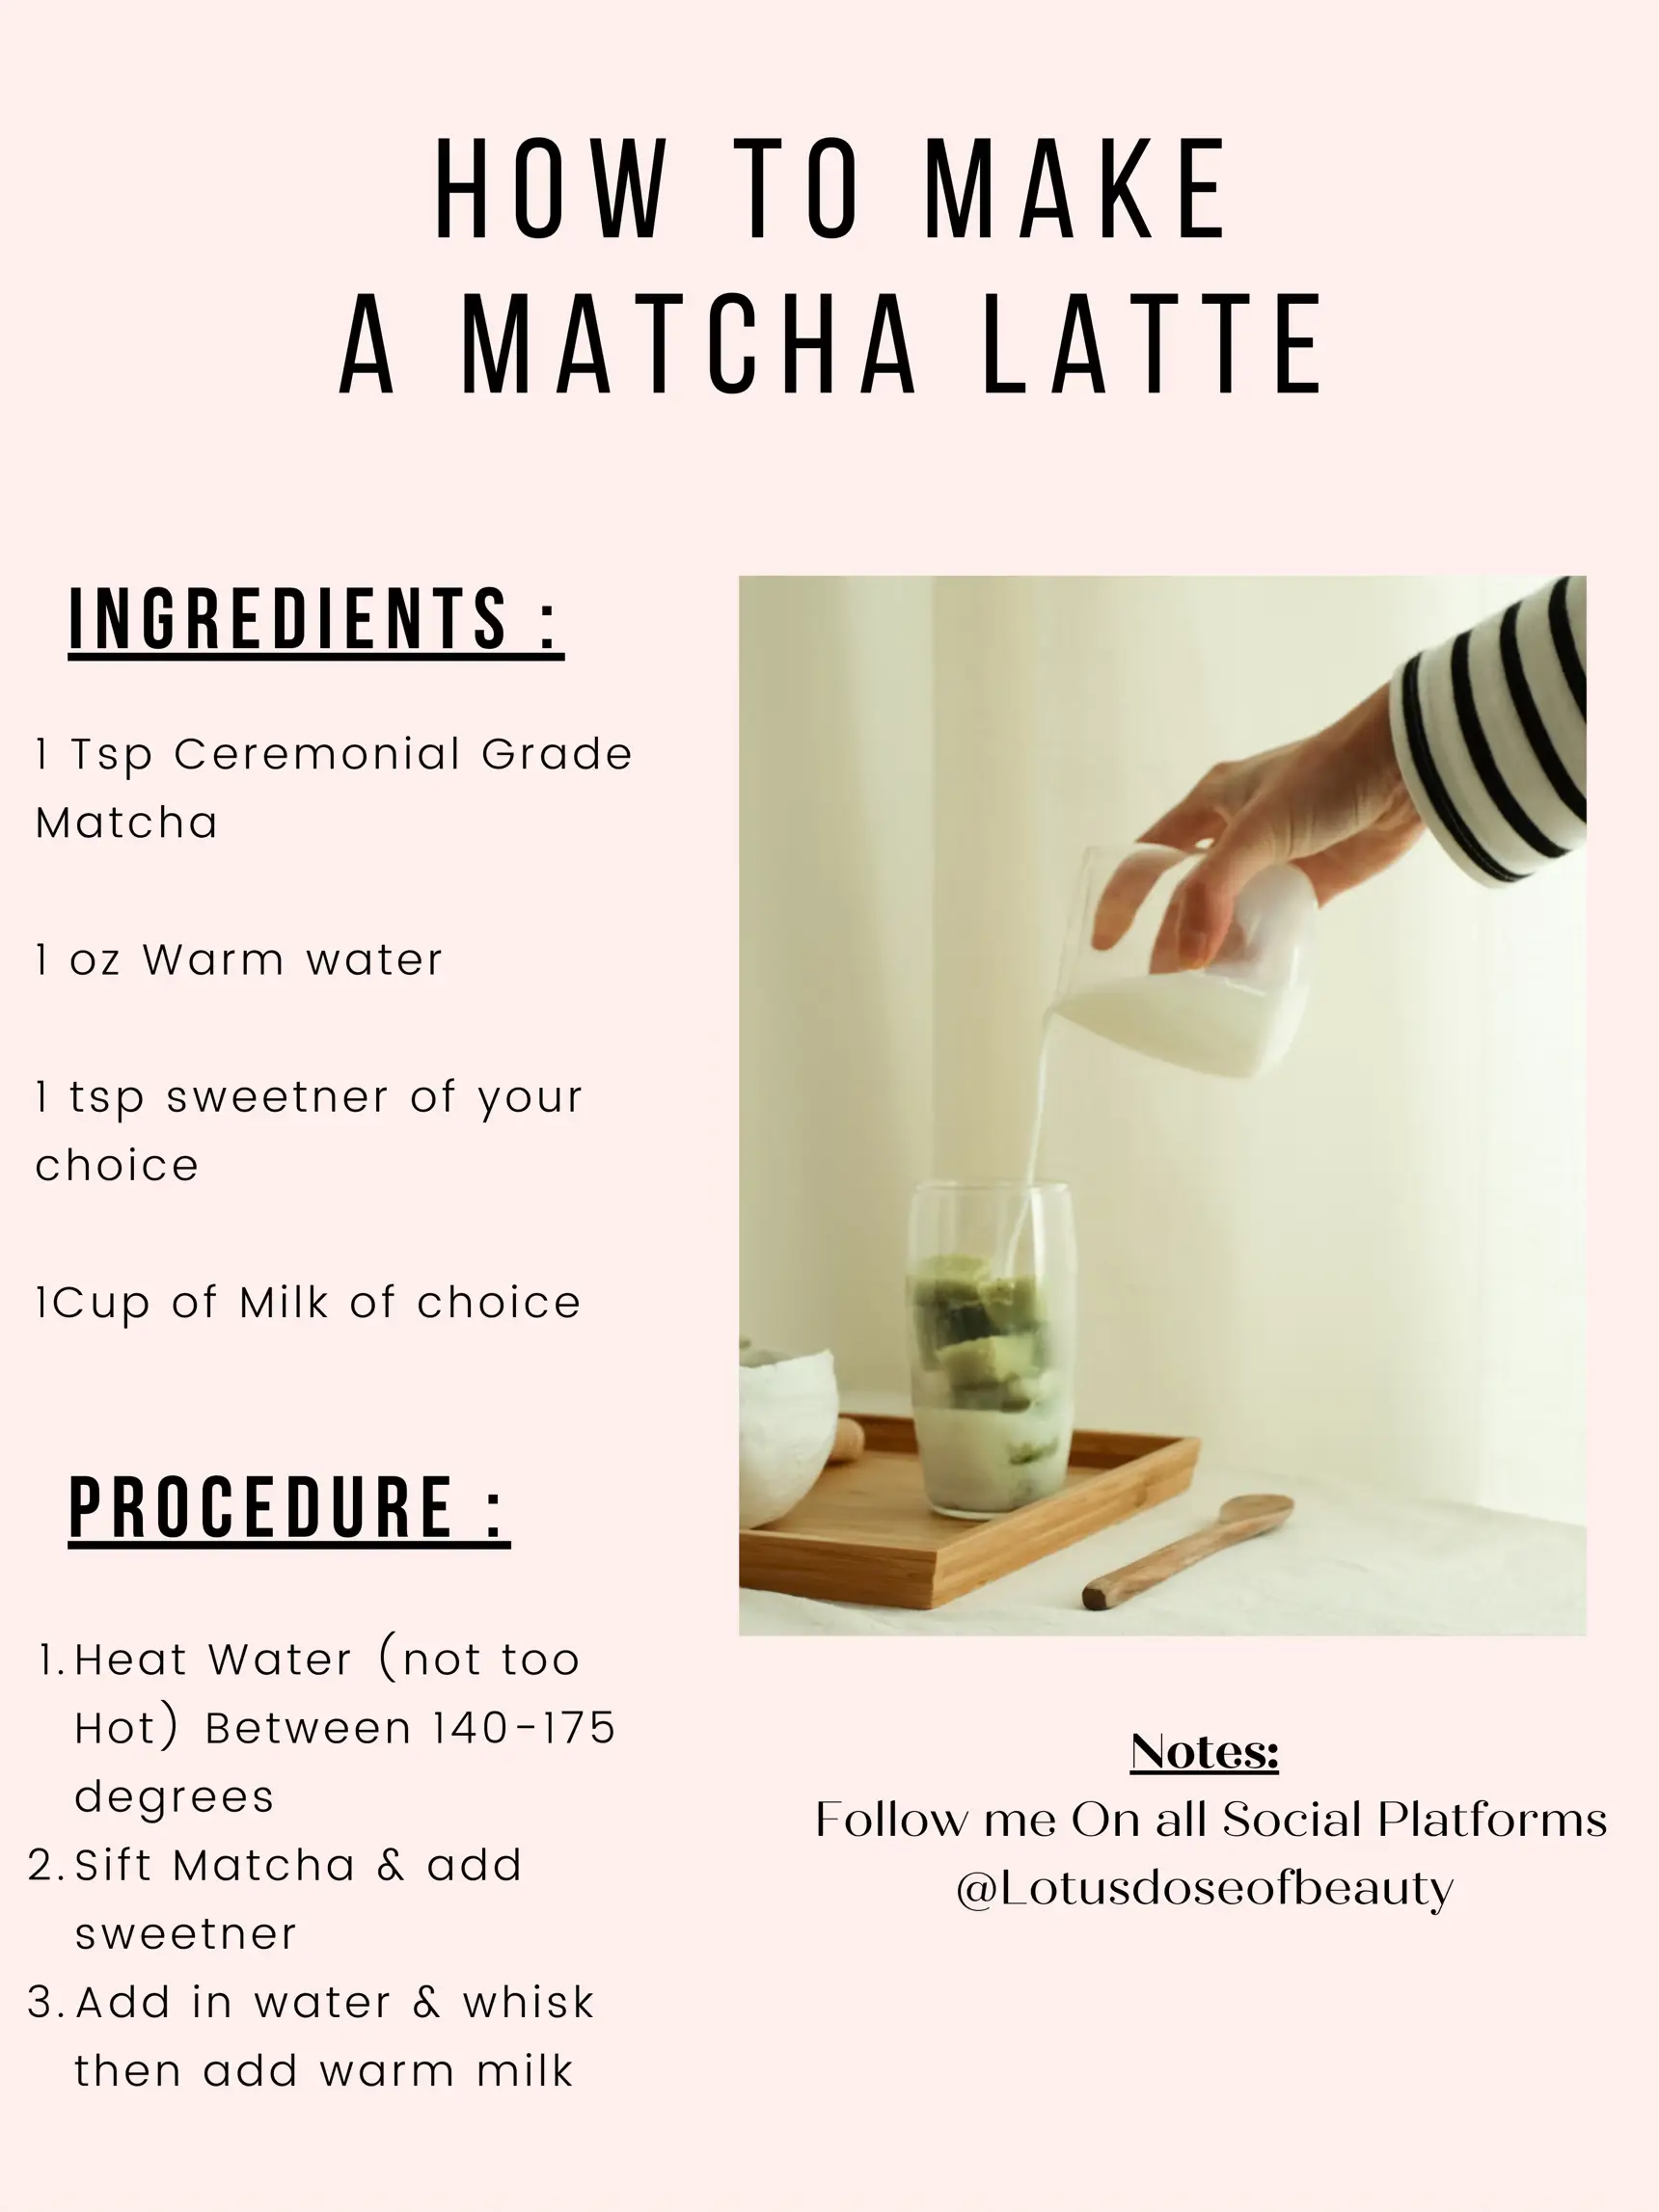 Ceremonial Grade Matcha – Artbean Coffee